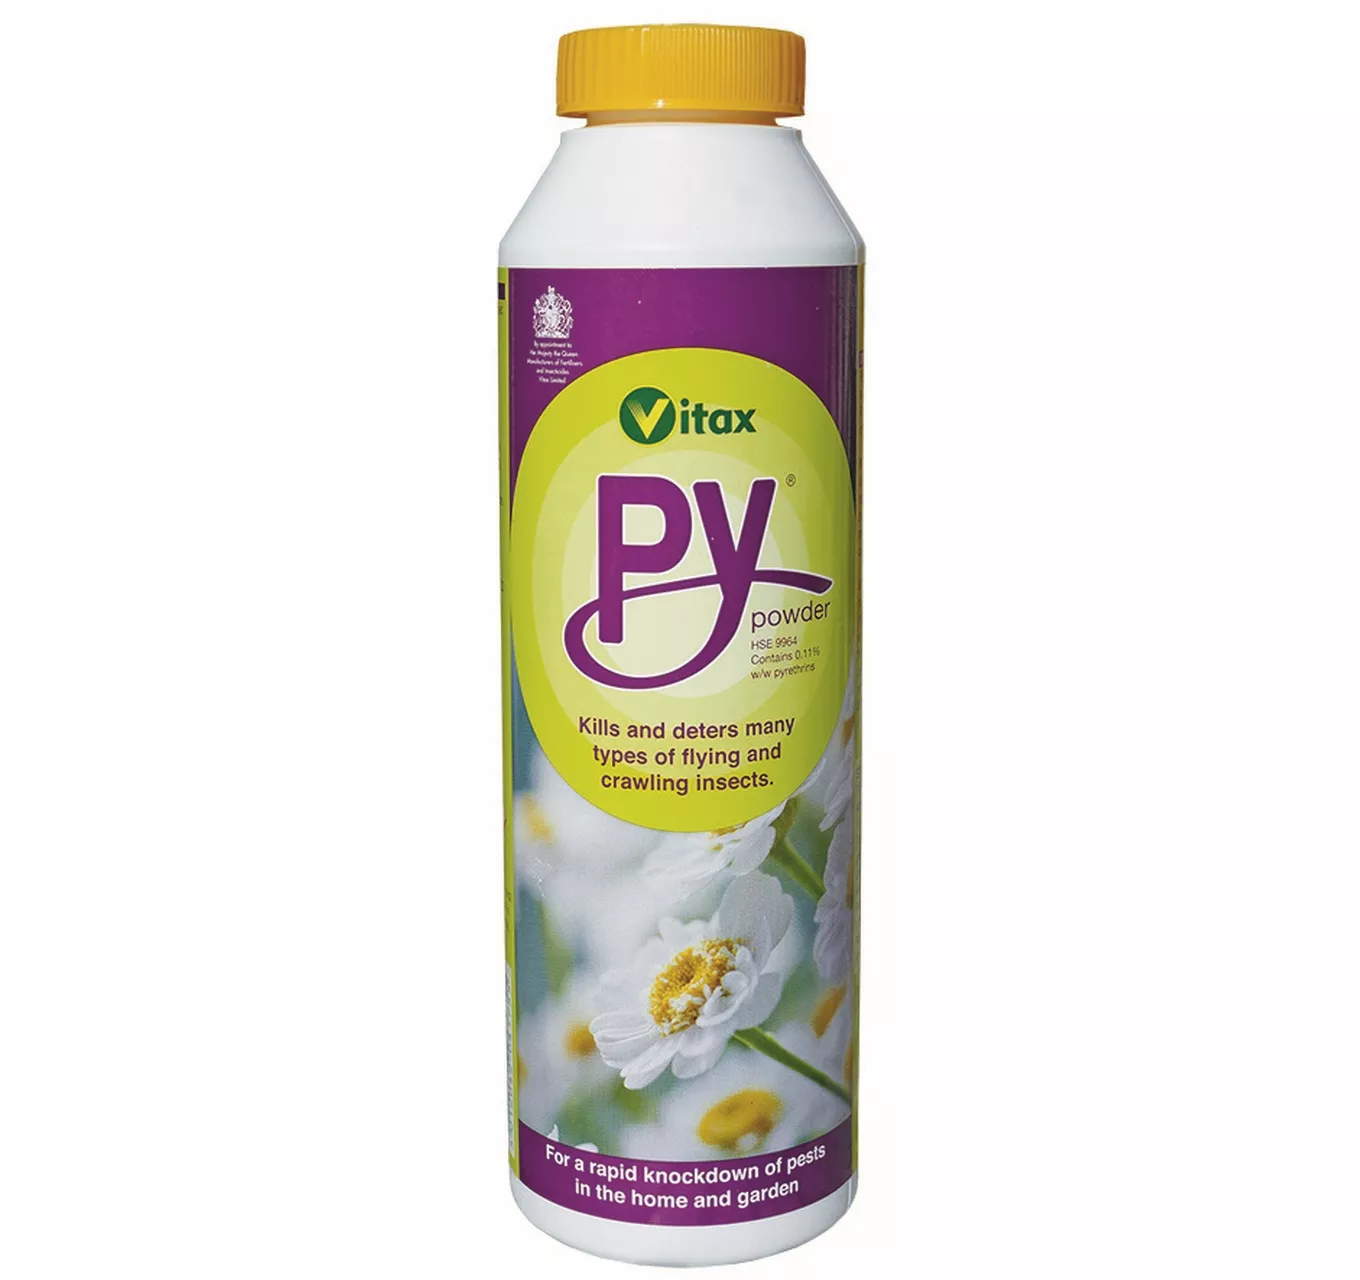 PY Powder 175g